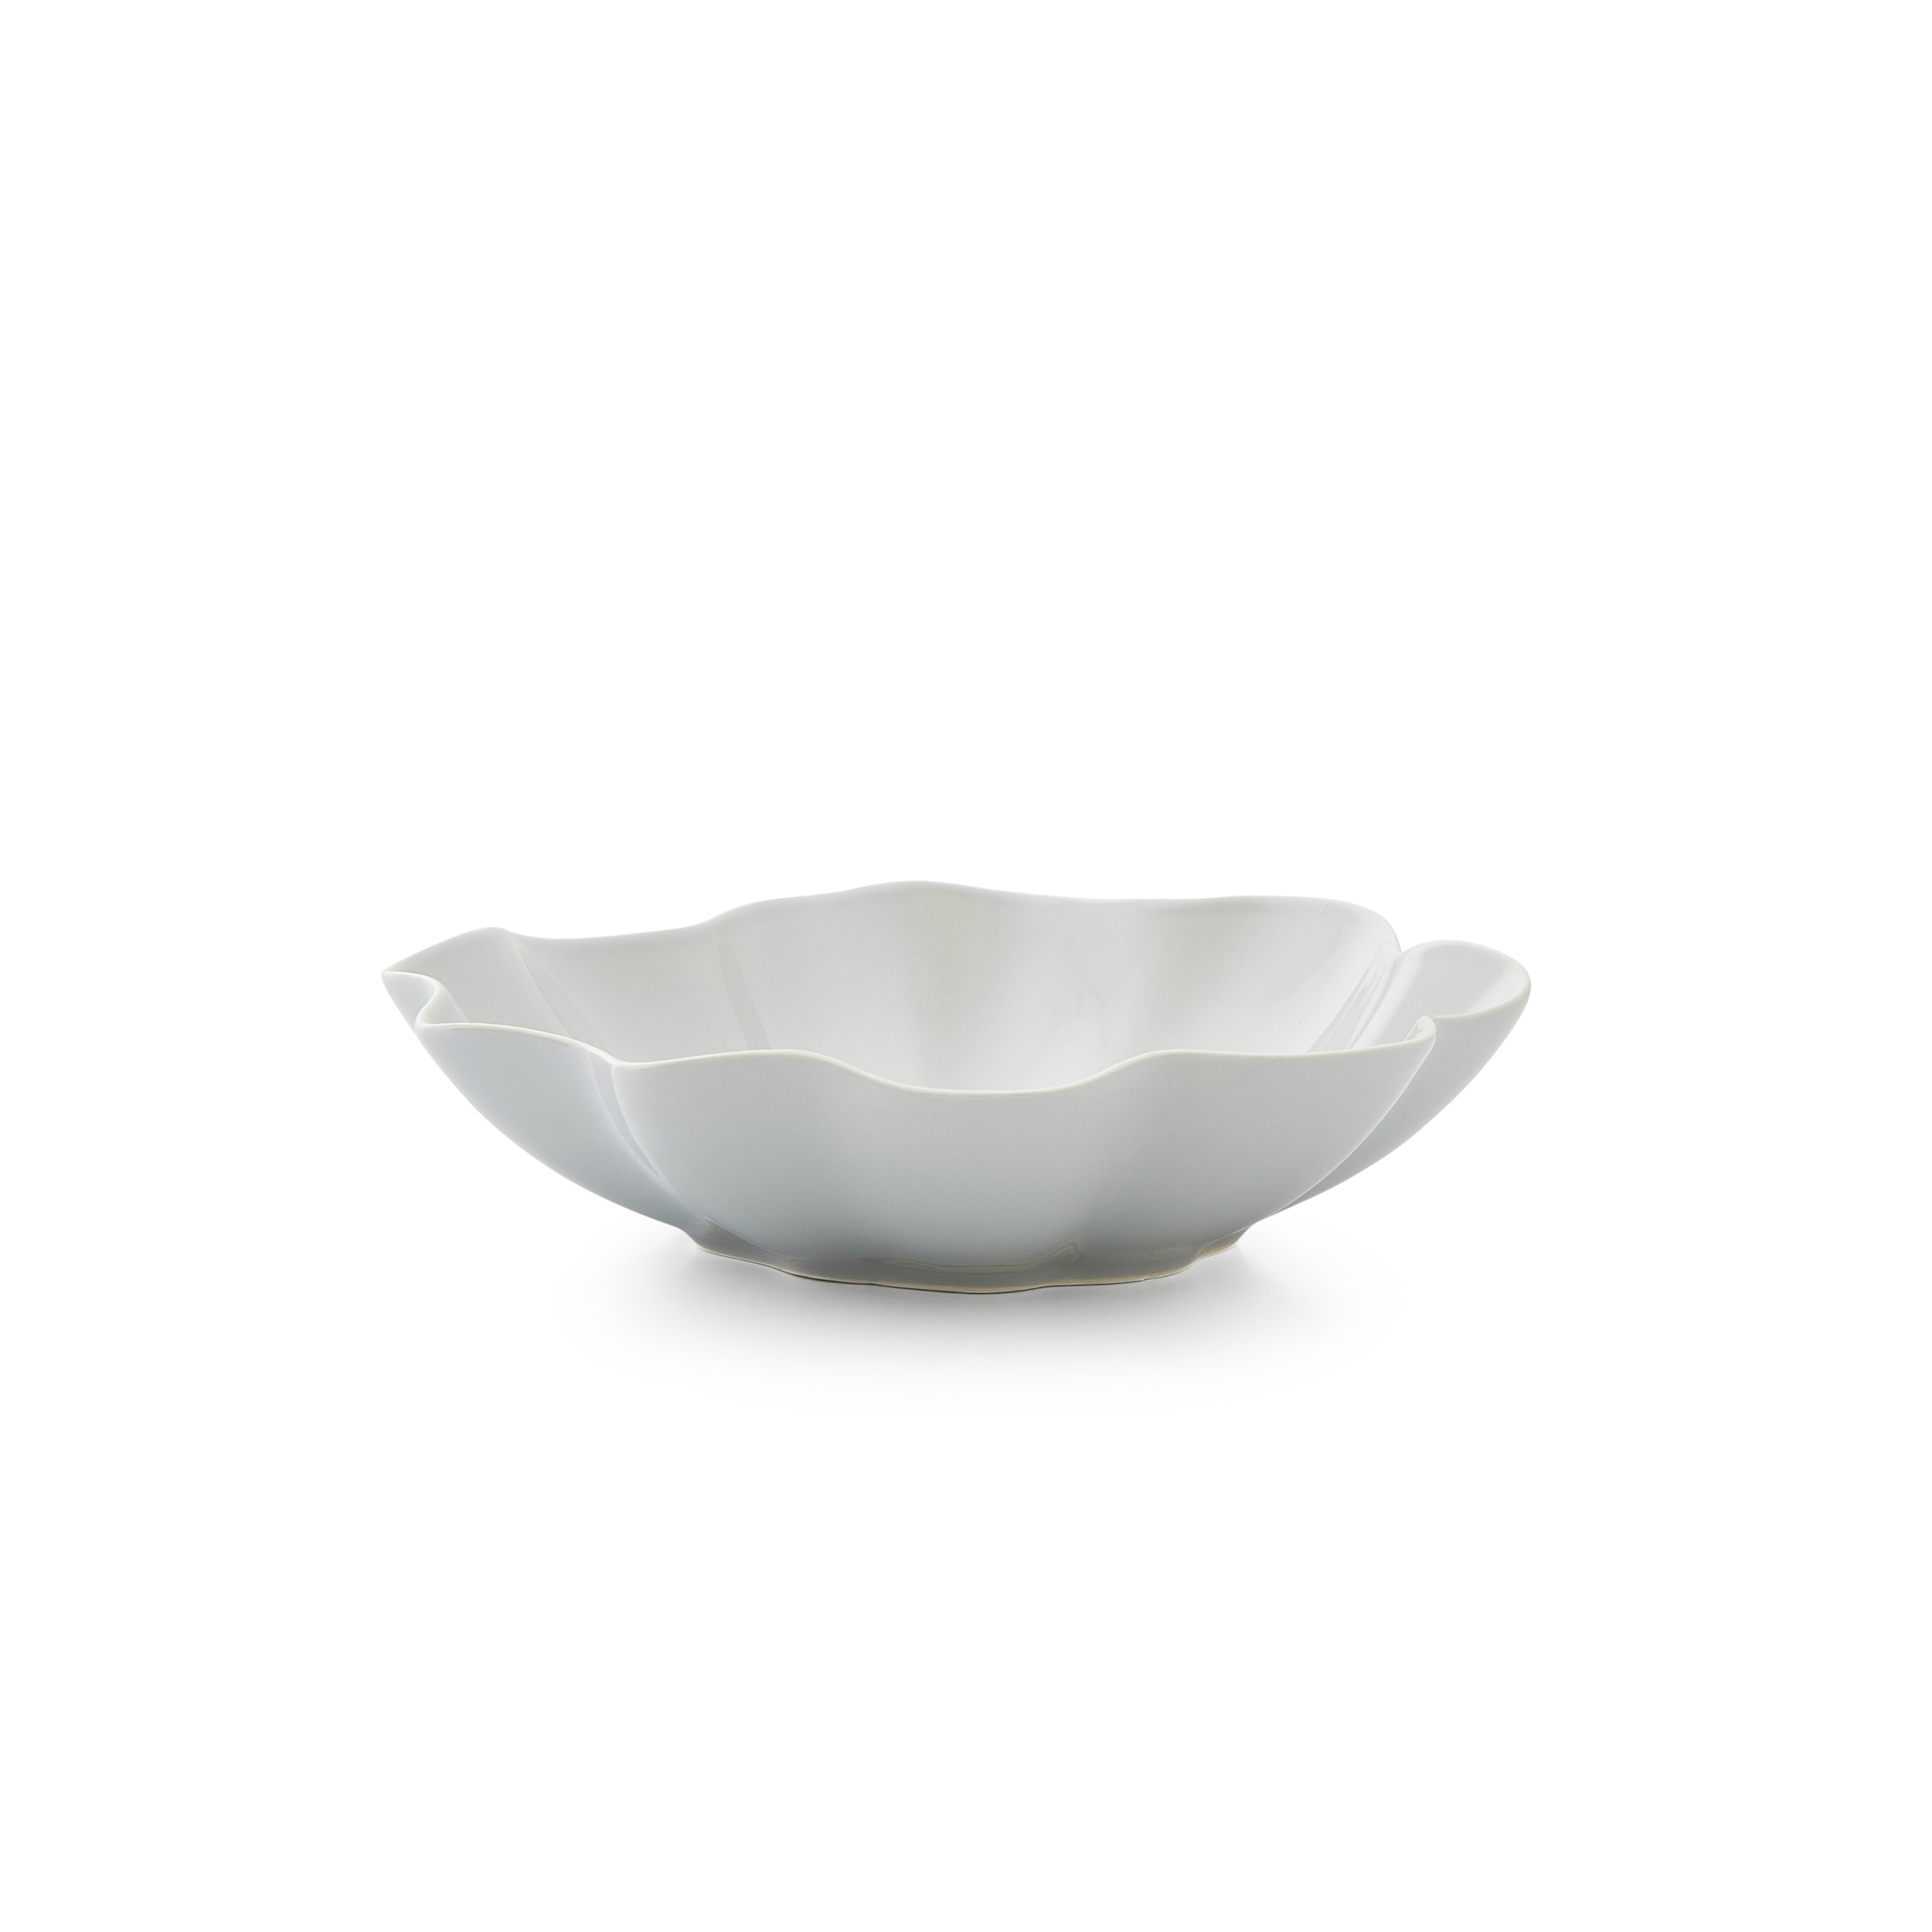 Sophie Conran Floret 9 Inch Pasta Bowl, Dove Grey image number null